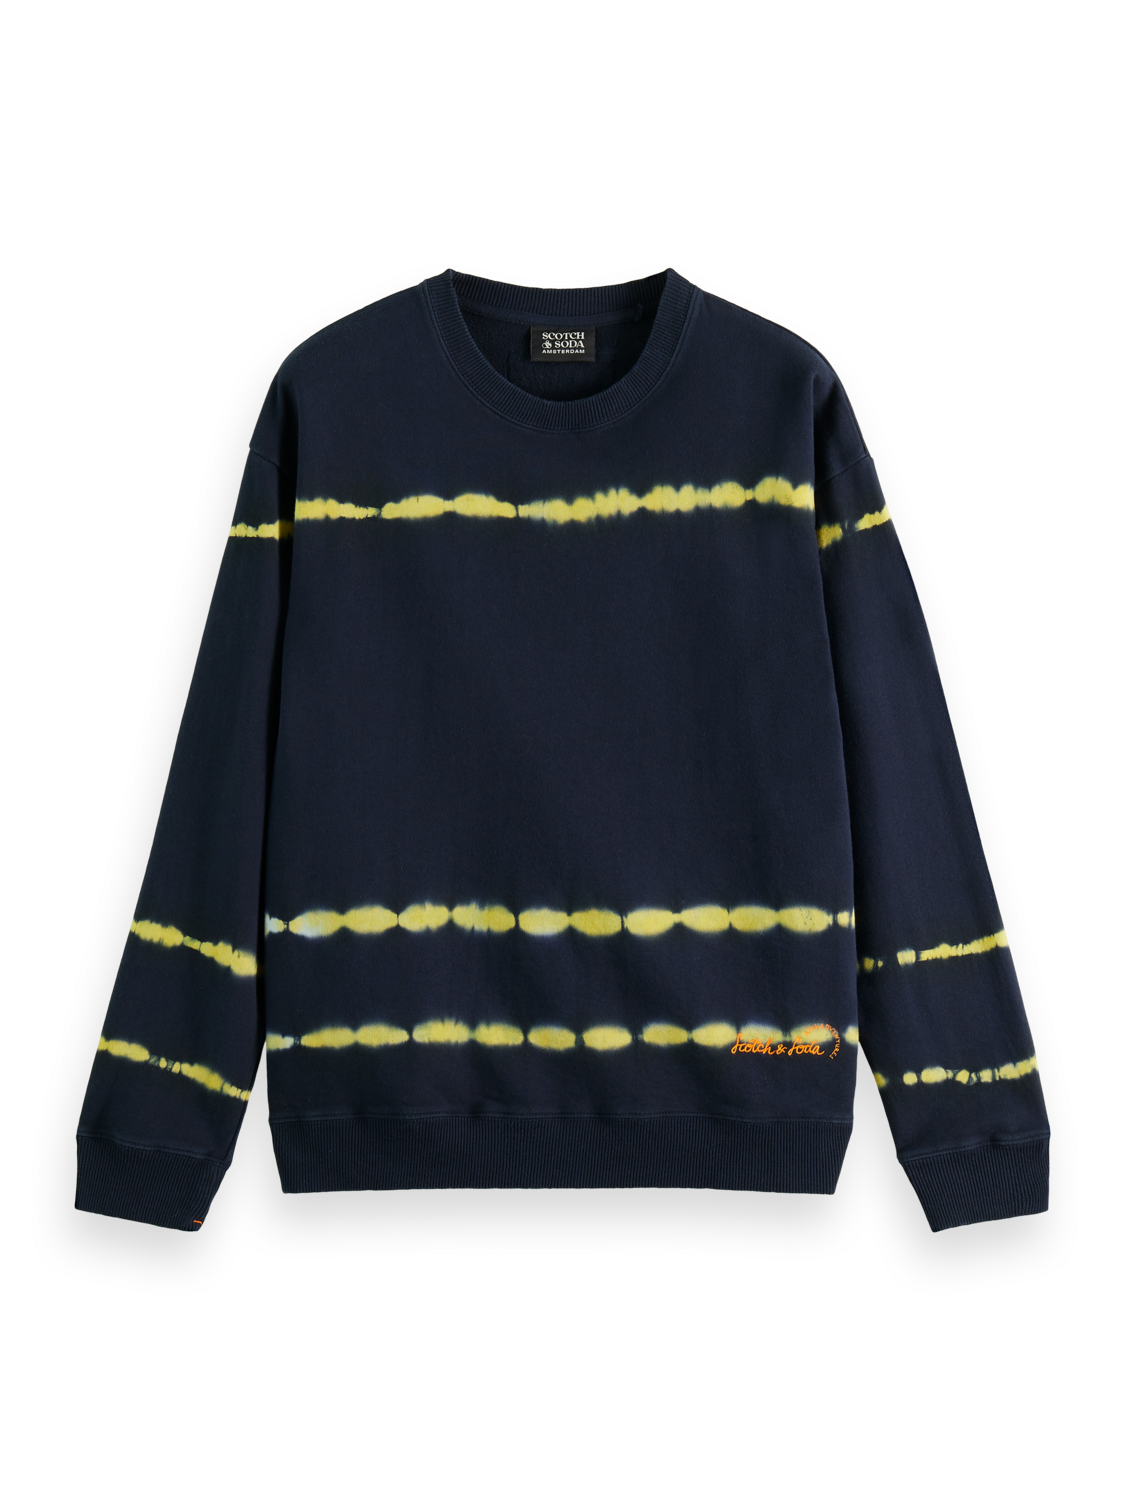 Scotch & Soda Felpa Crew Neck Sweatshirt - Tie-Dye - Two Design Options